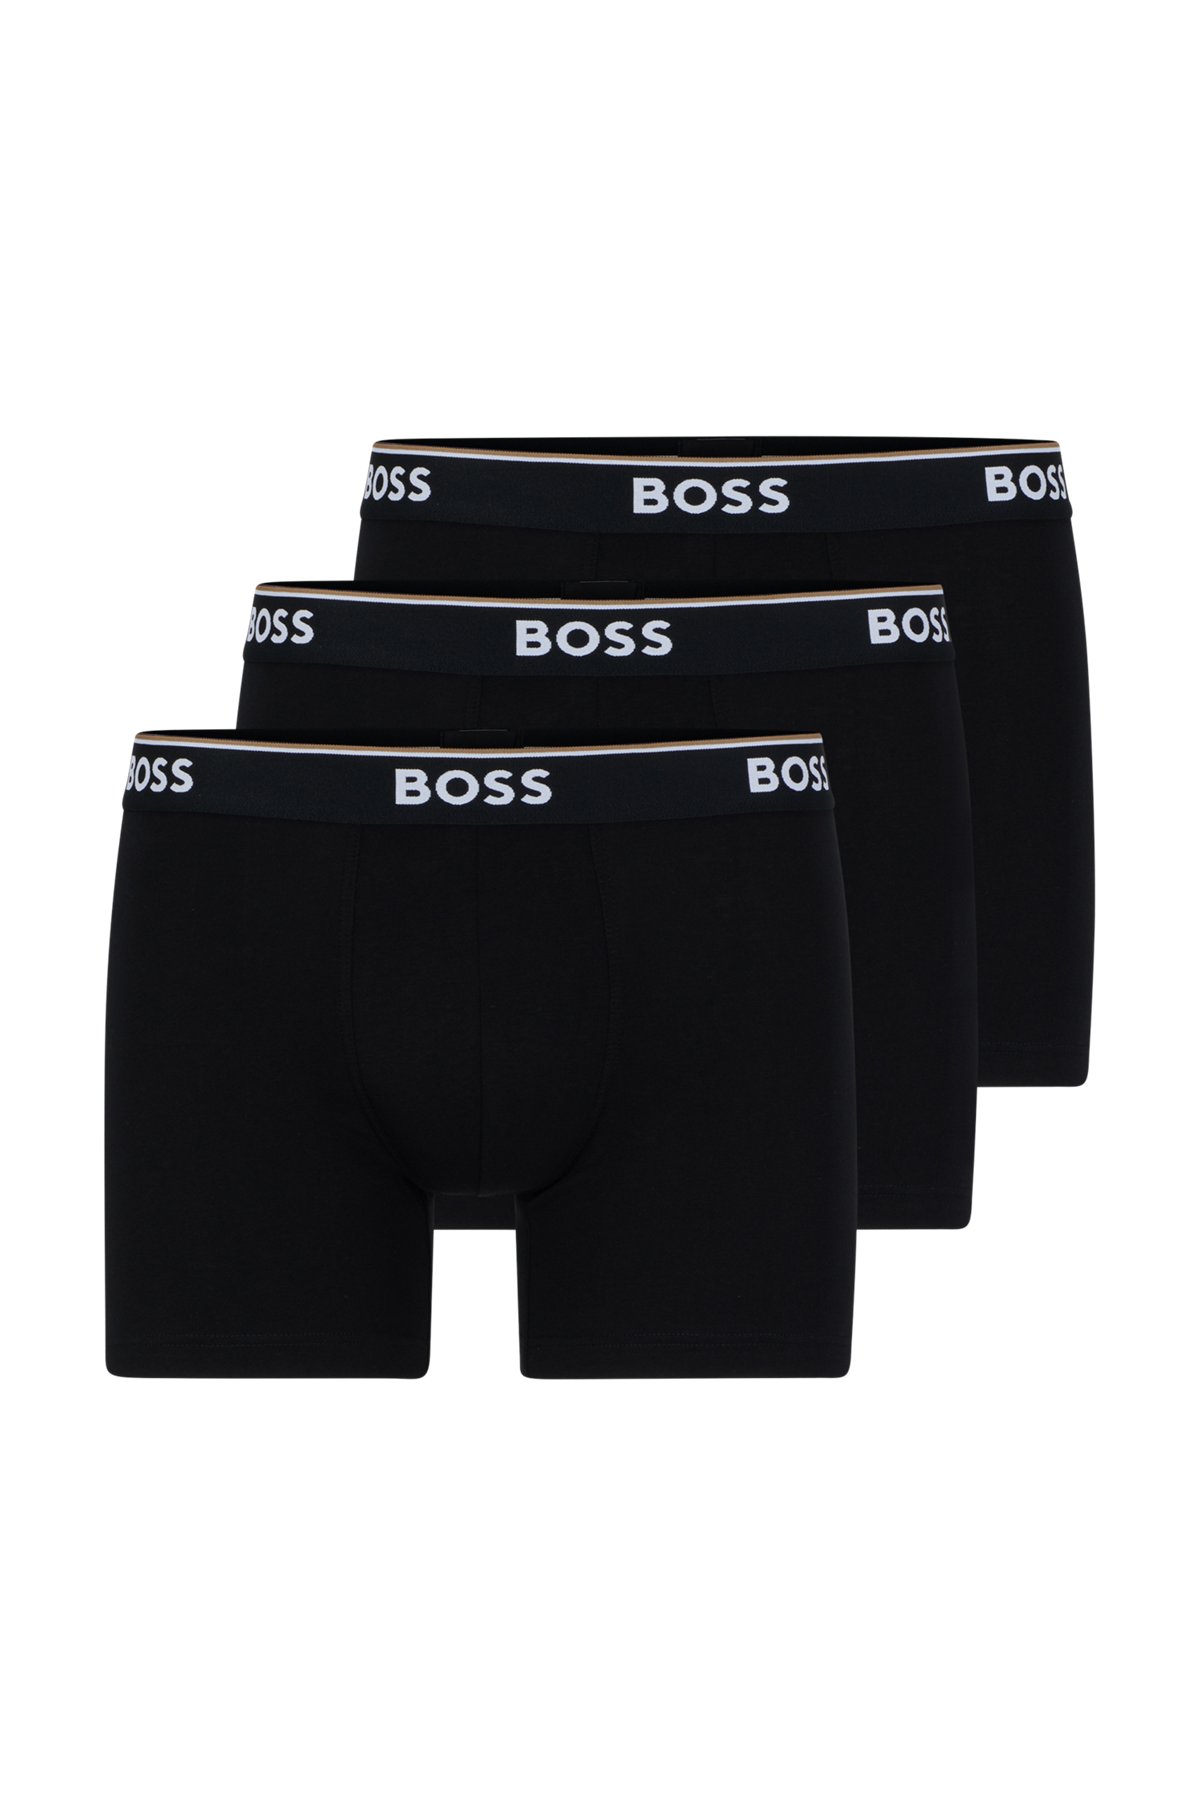 BOSS - ボクサーパンツ3枚セット ストレッチコットン ロゴ